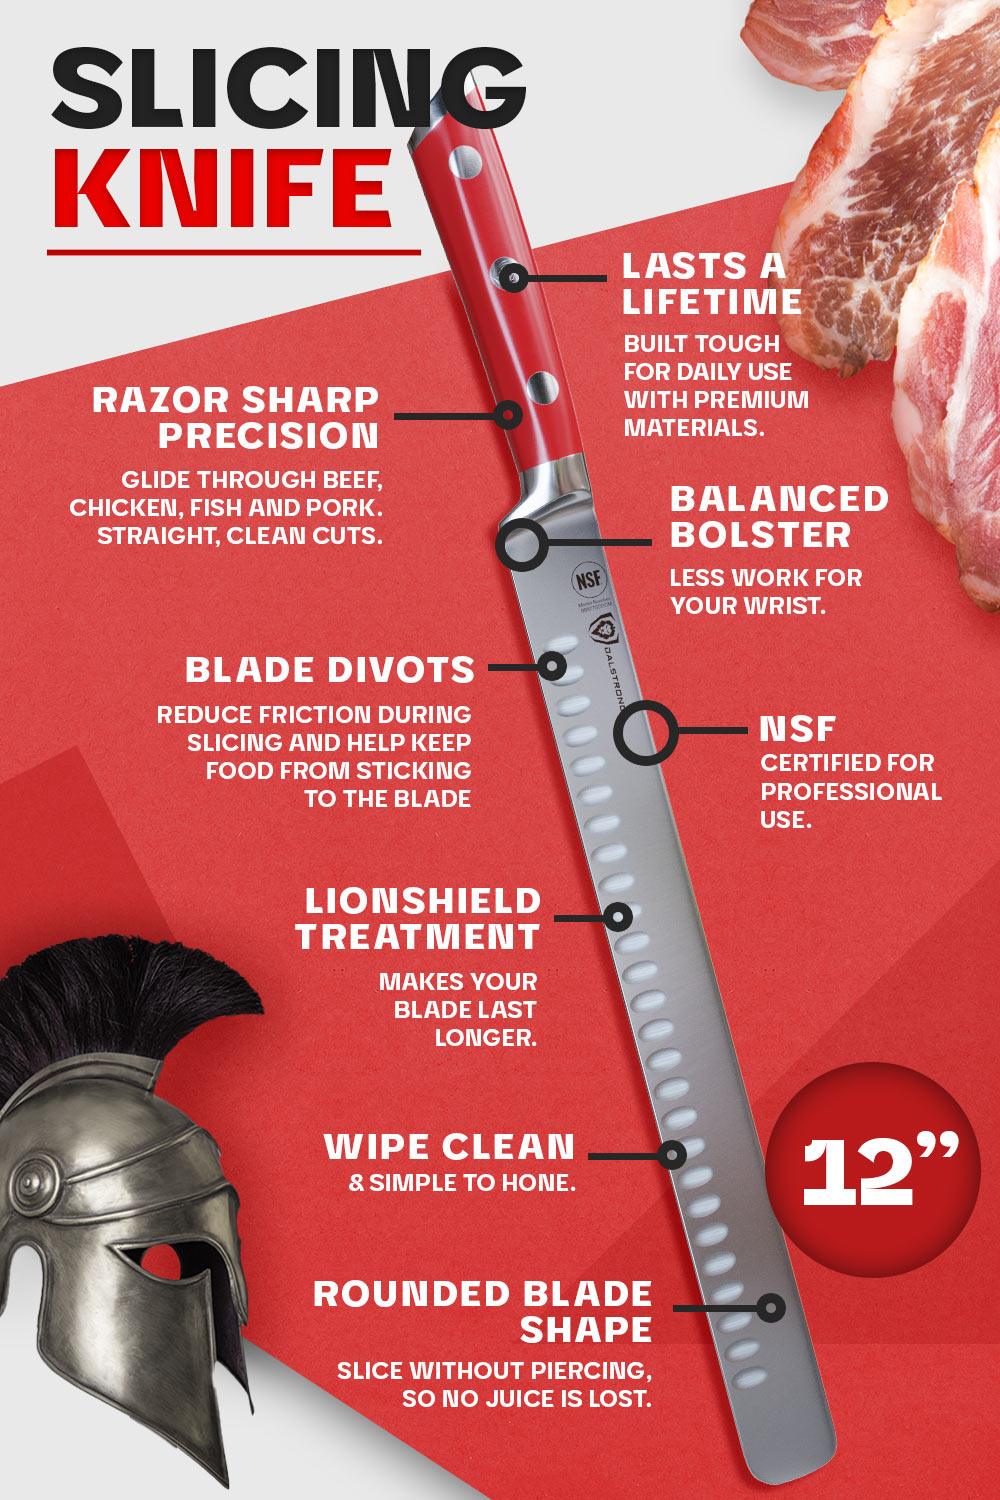 Dalstrong Brisket Slicing Knife - 12 inch Blade - Gladiator Series - Granton Edge - High Carbon German Steel - Crimson Red ABS Handle Kitchen Knife